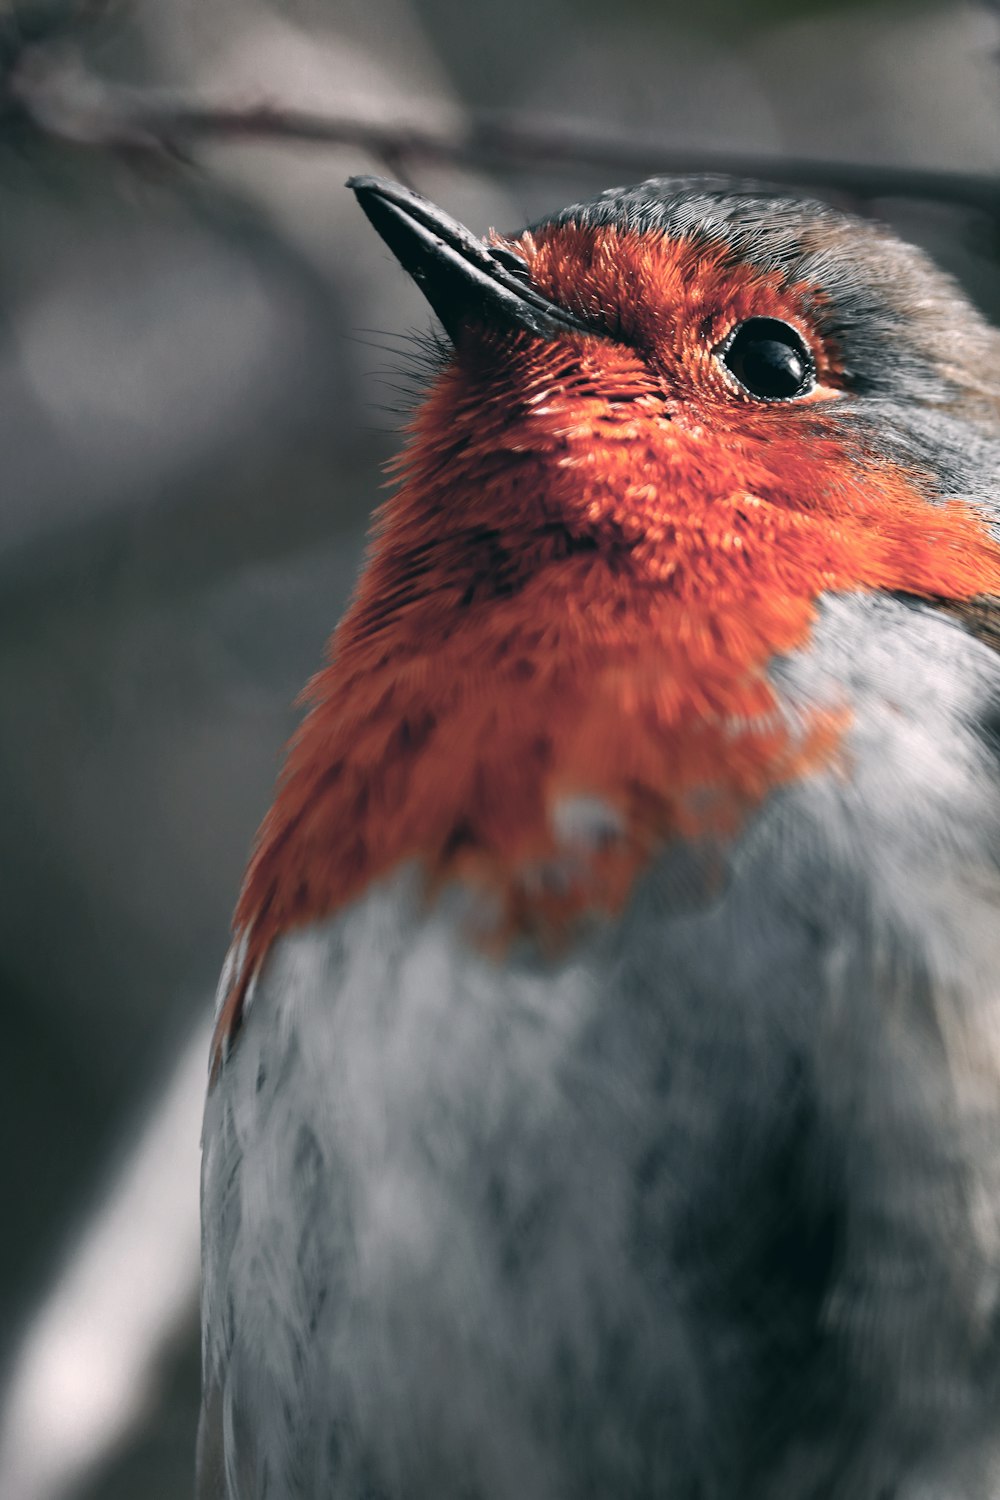 a close up of a bird on a branch